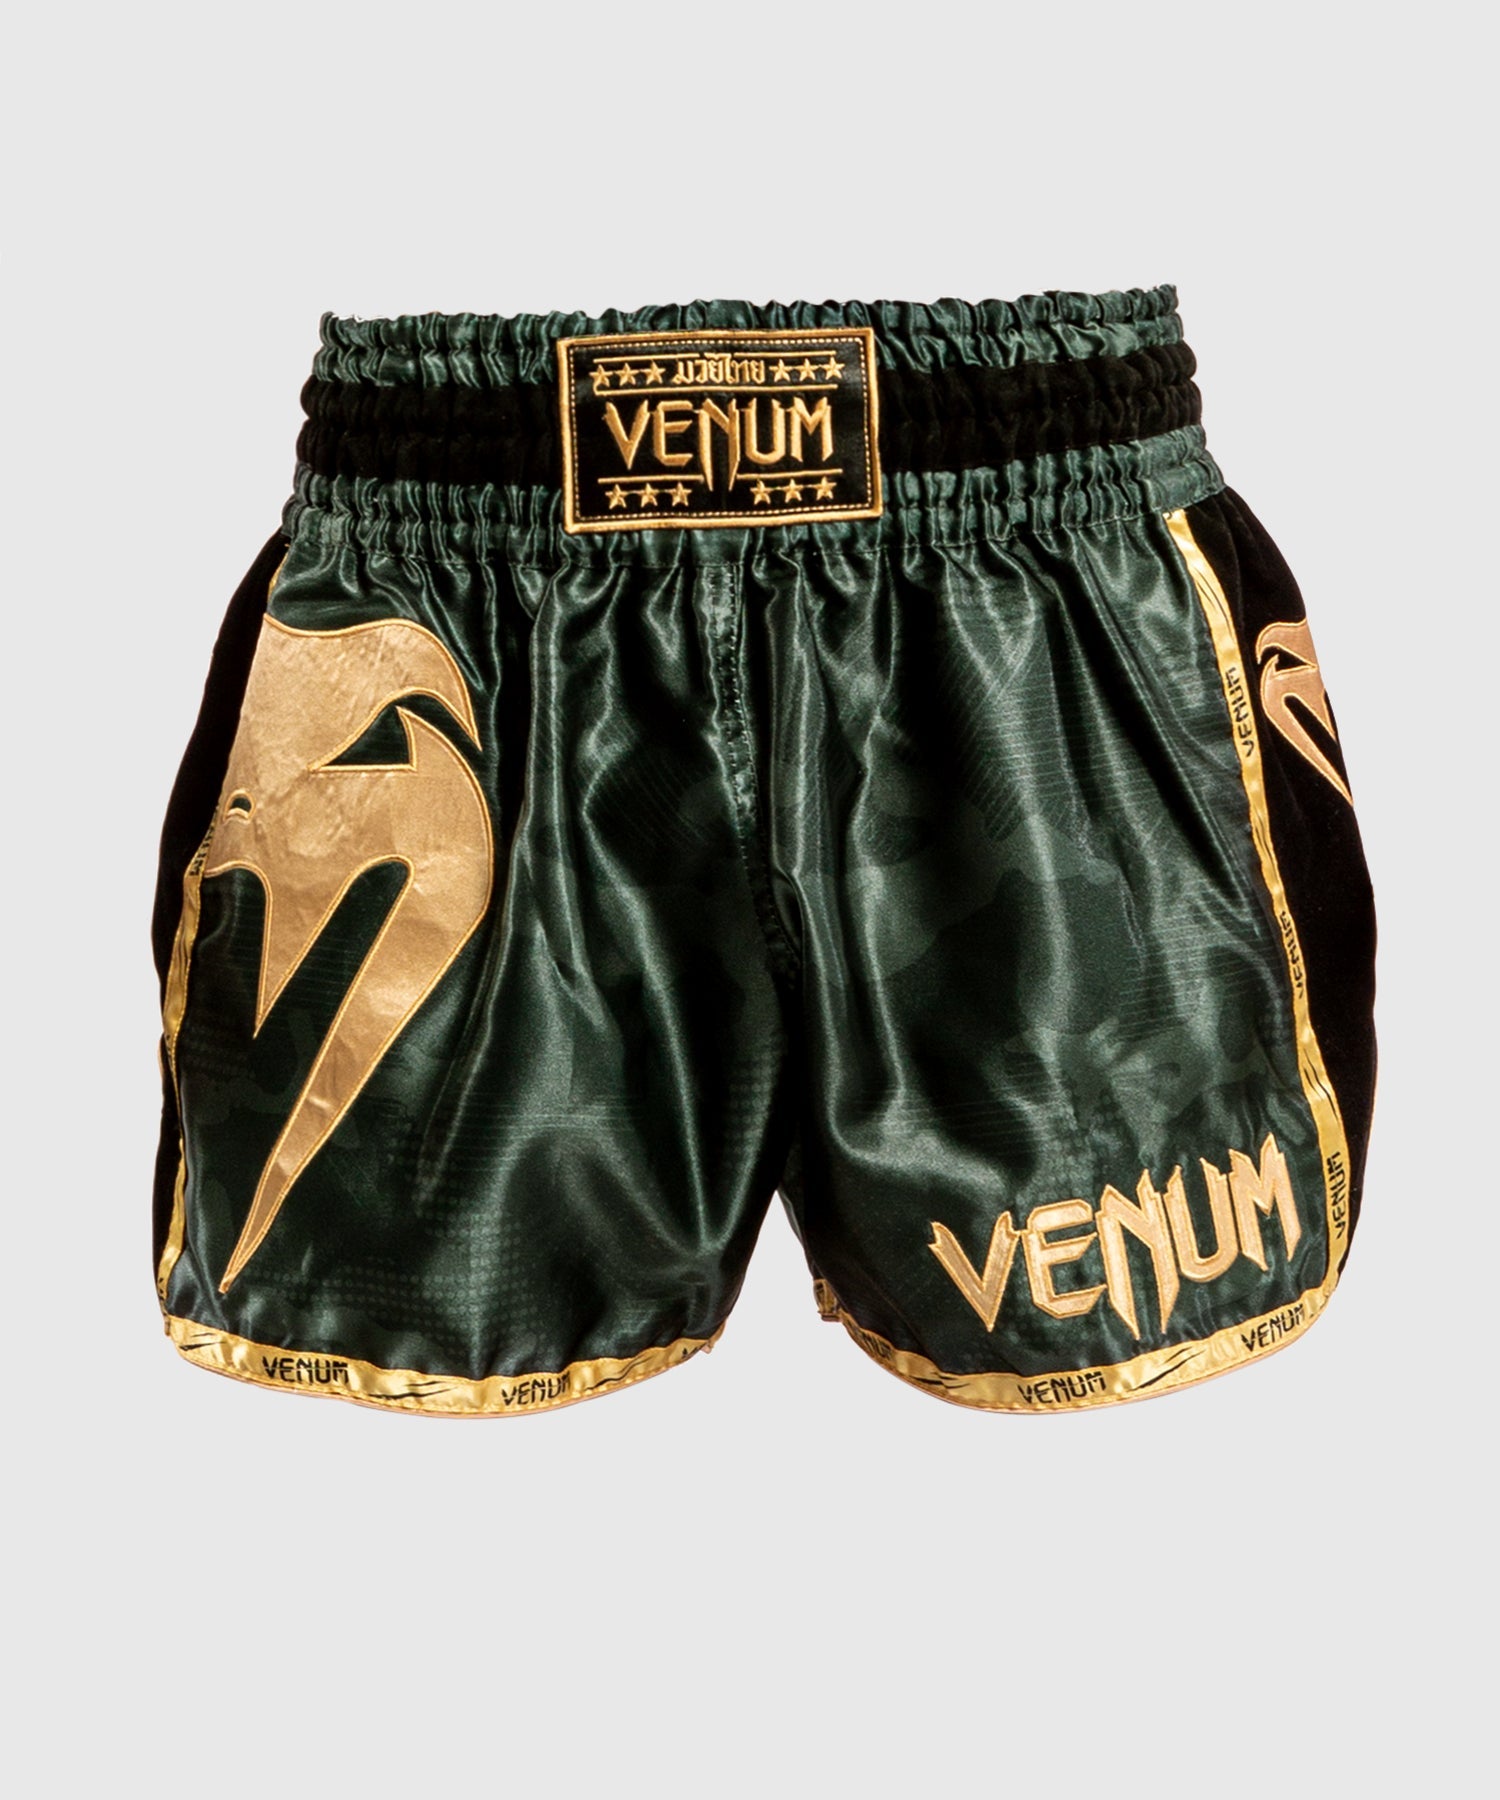 Venum Shorts MMA Boxing Muay Thai Camo Pattern size Large